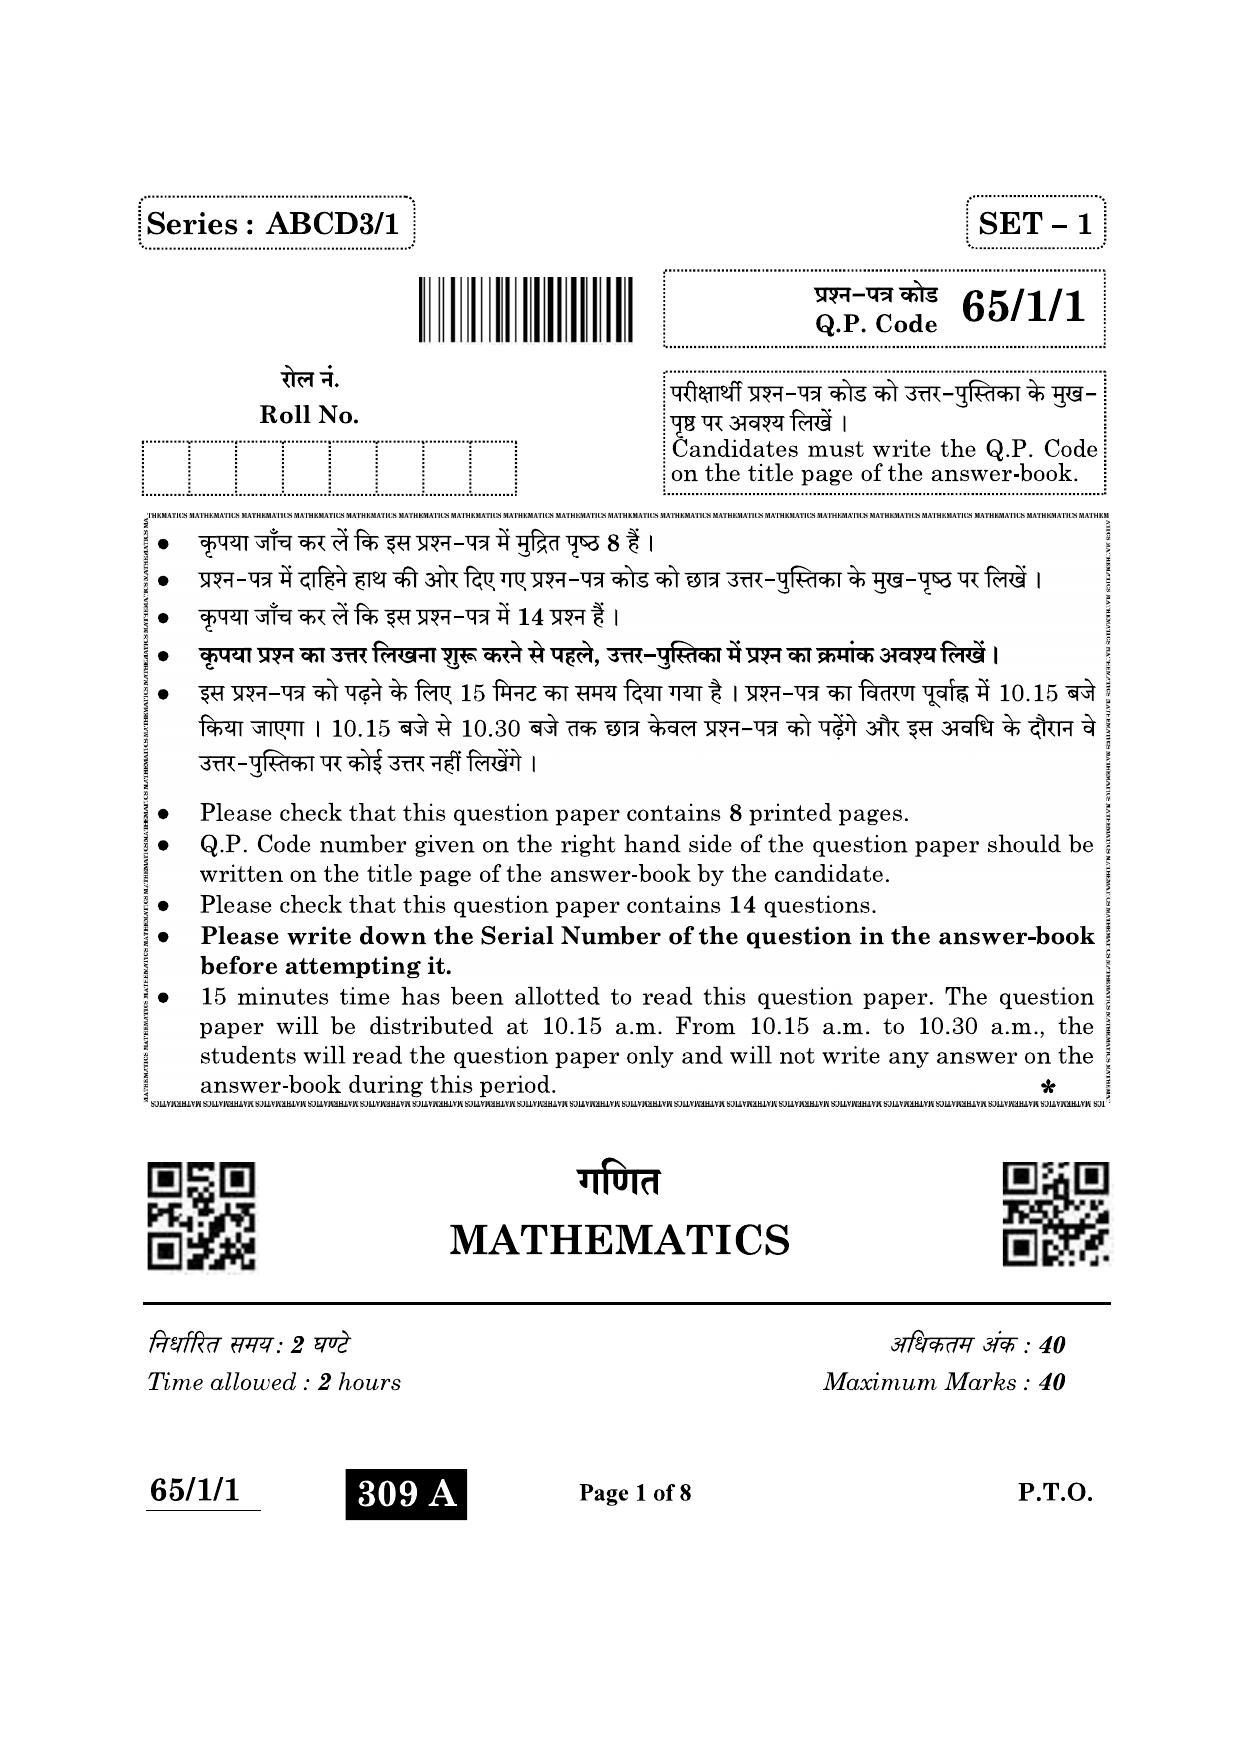 CBSE Class 12 65-1-1 Mathematcs 2022 Question Paper - Page 1